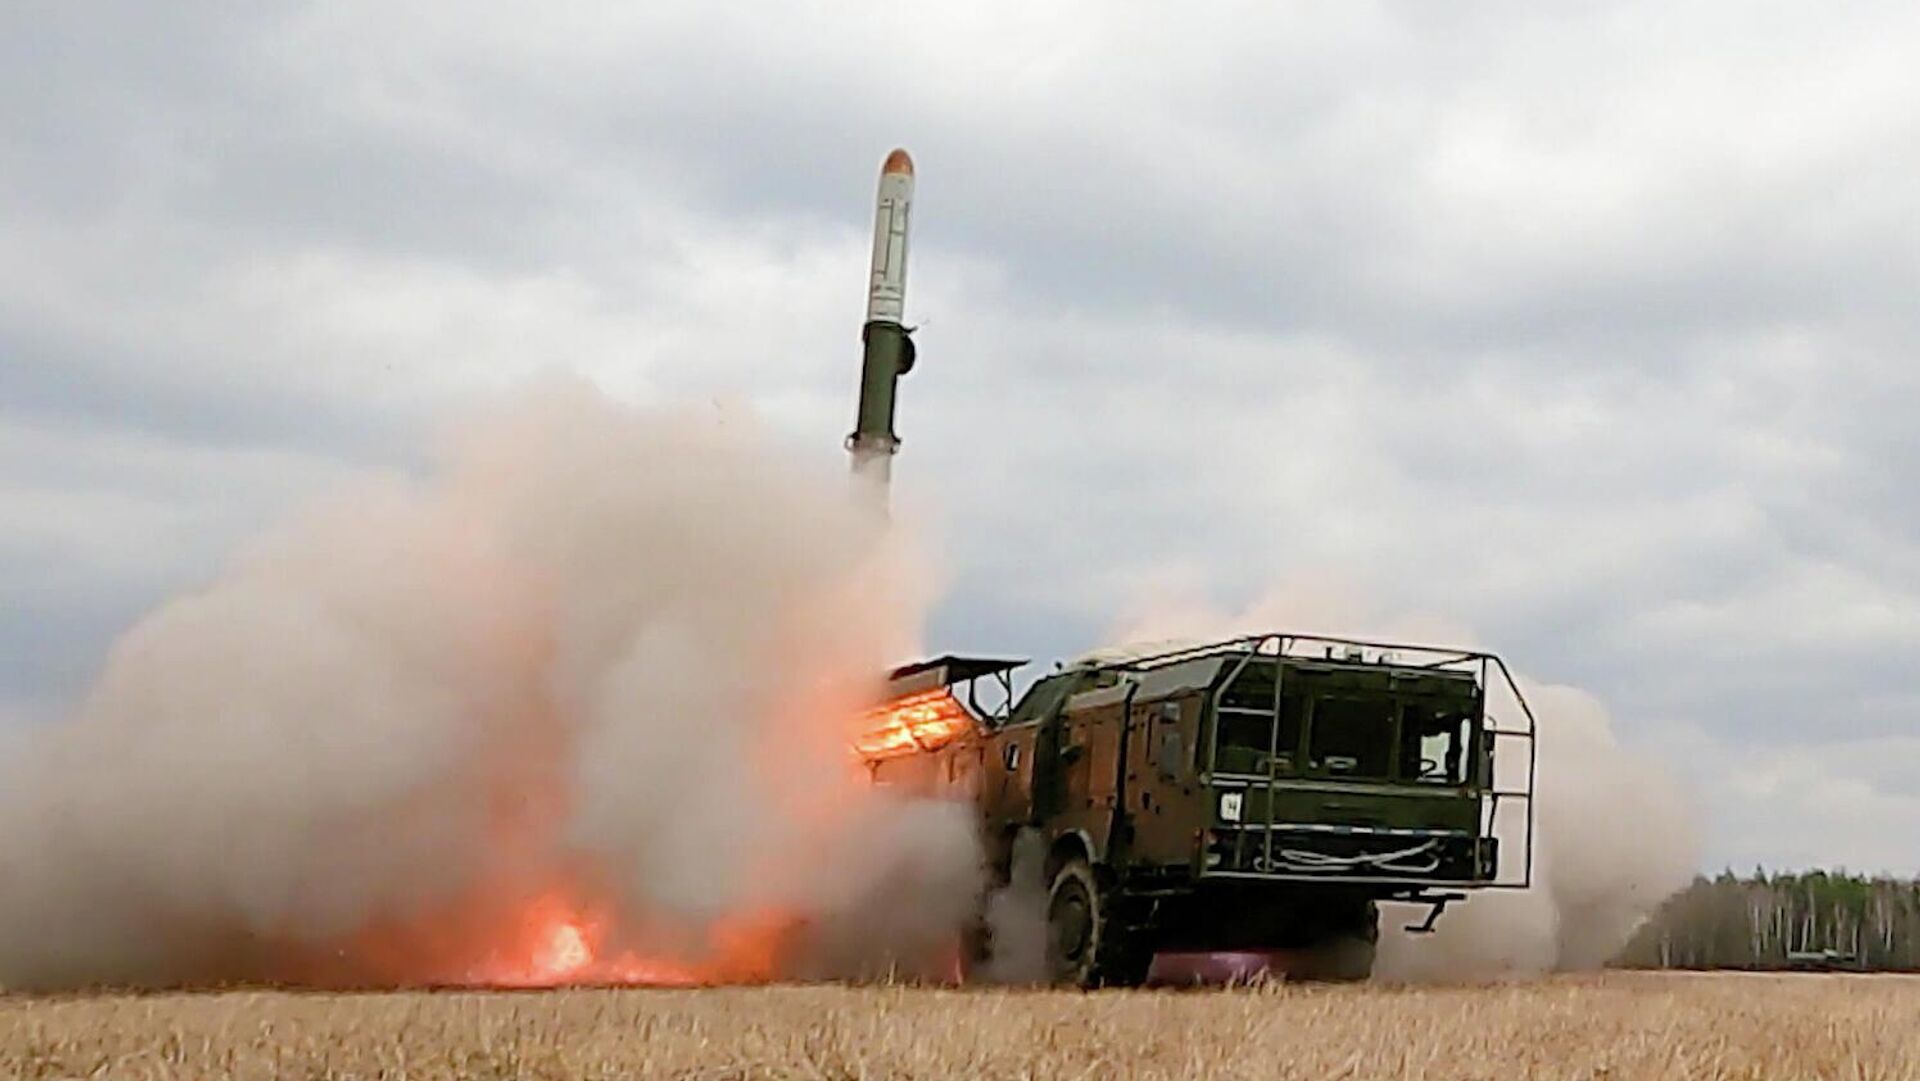  Iskander short-range ballistic missile system is used during the Russian military operation in Ukraine - Sputnik International, 1920, 19.11.2022